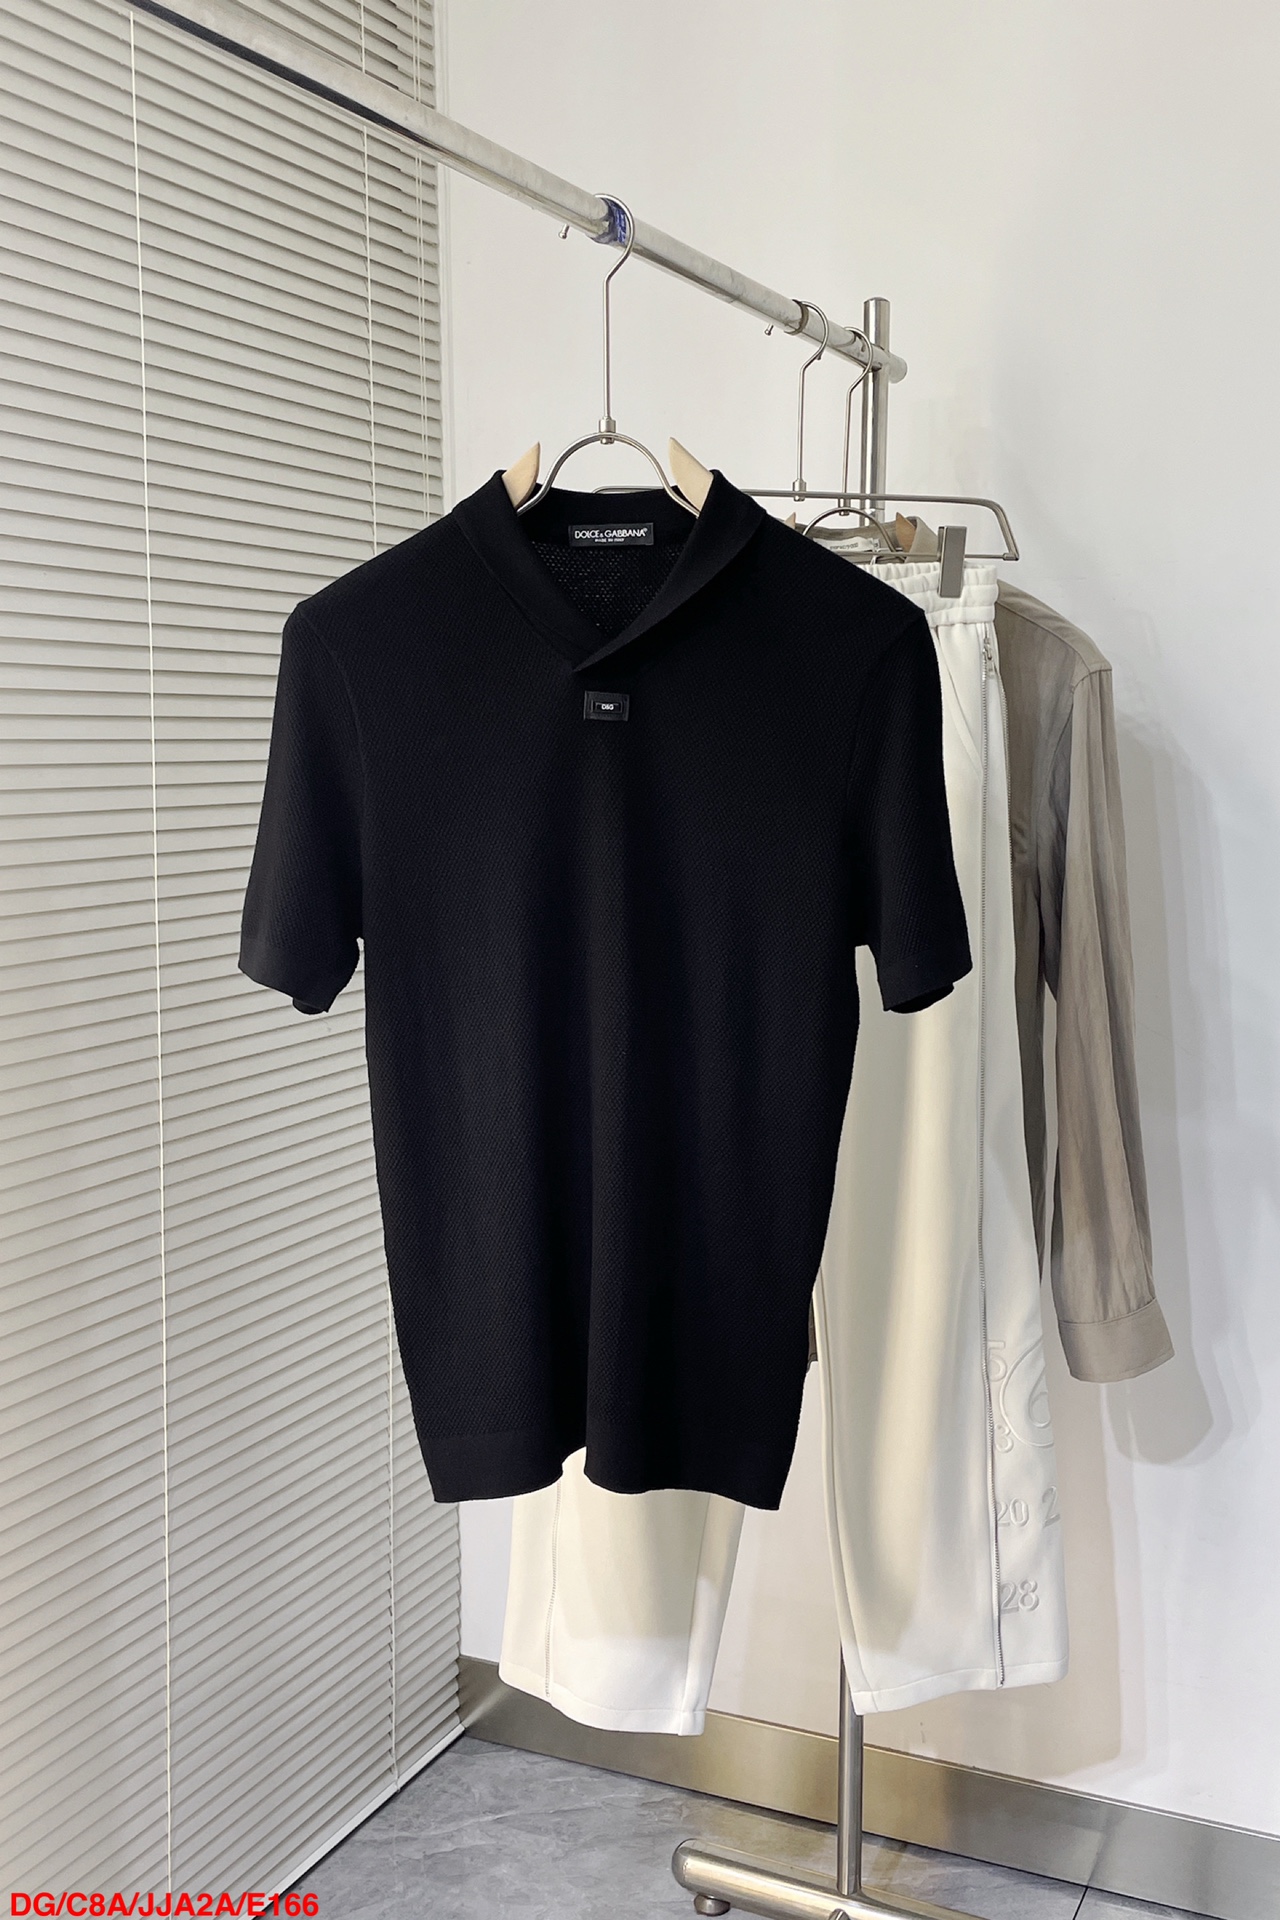 Dolce & Gabbana Clothing T-Shirt Unisex Cotton Spring Collection Fashion Short Sleeve